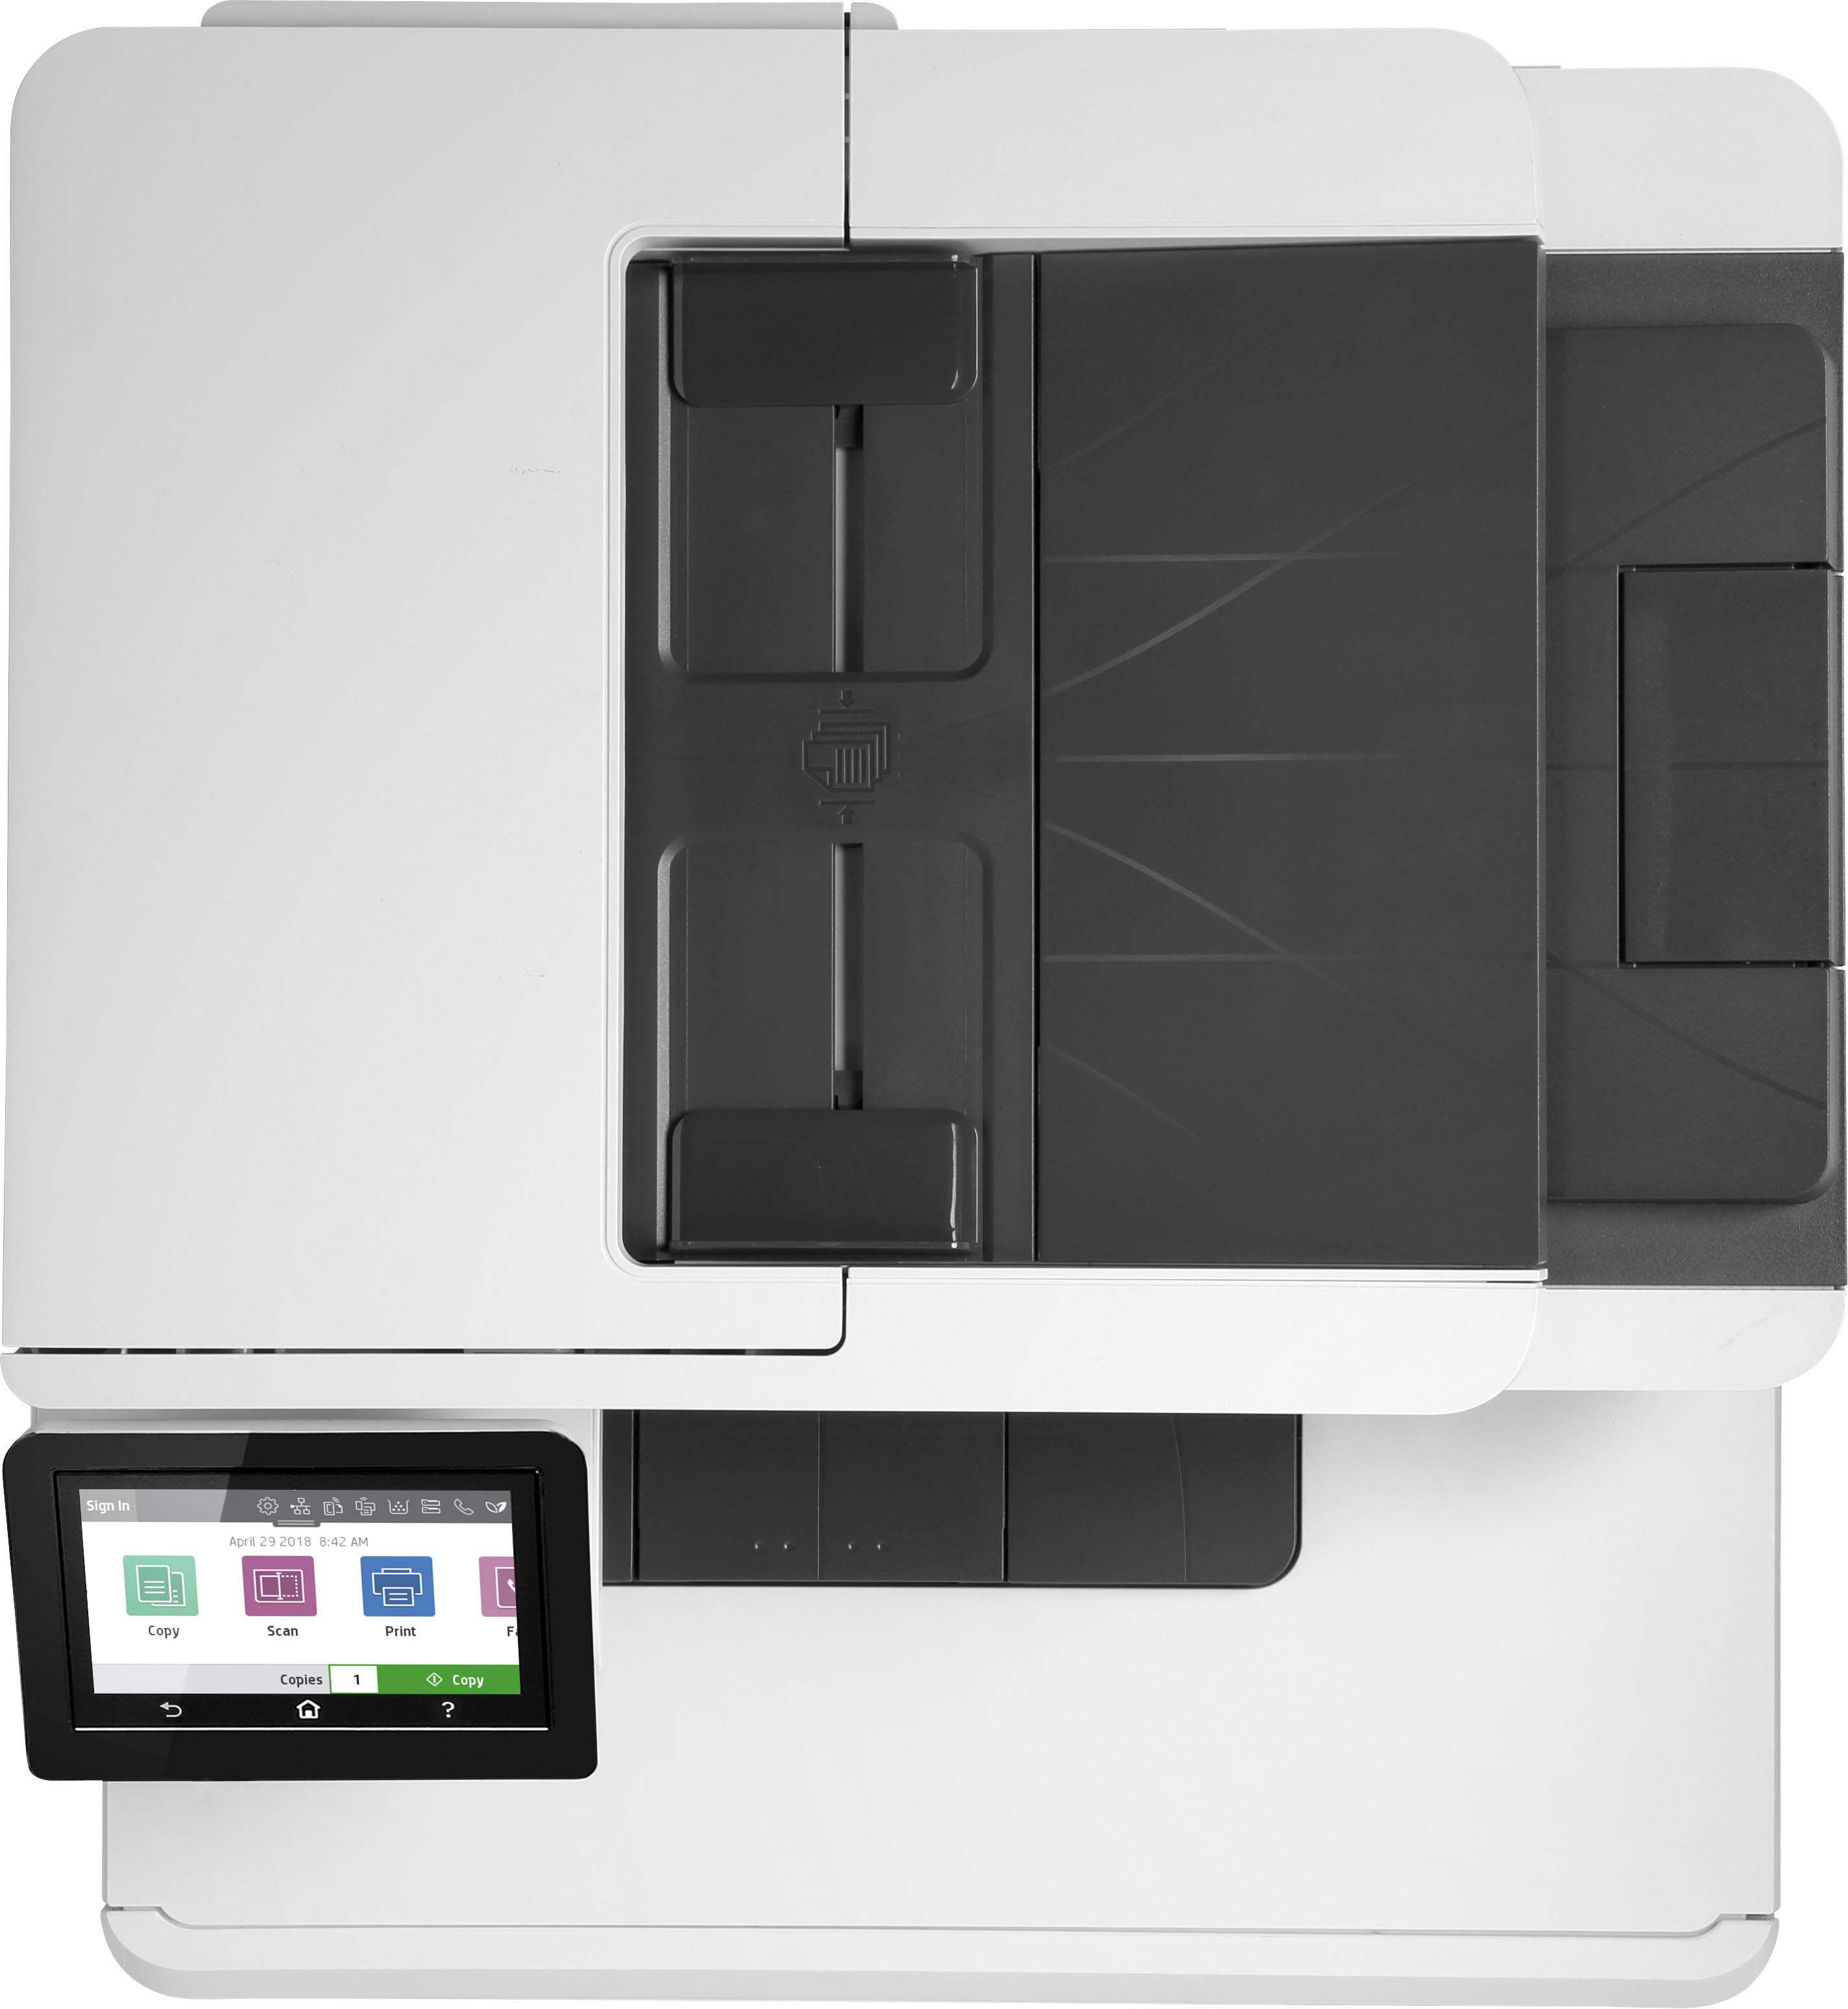 HP Color LaserJet PANTONE®-kalibriert Multifunktionsdrucker HP ImageREt 3600, Pro M479 WLAN MFP